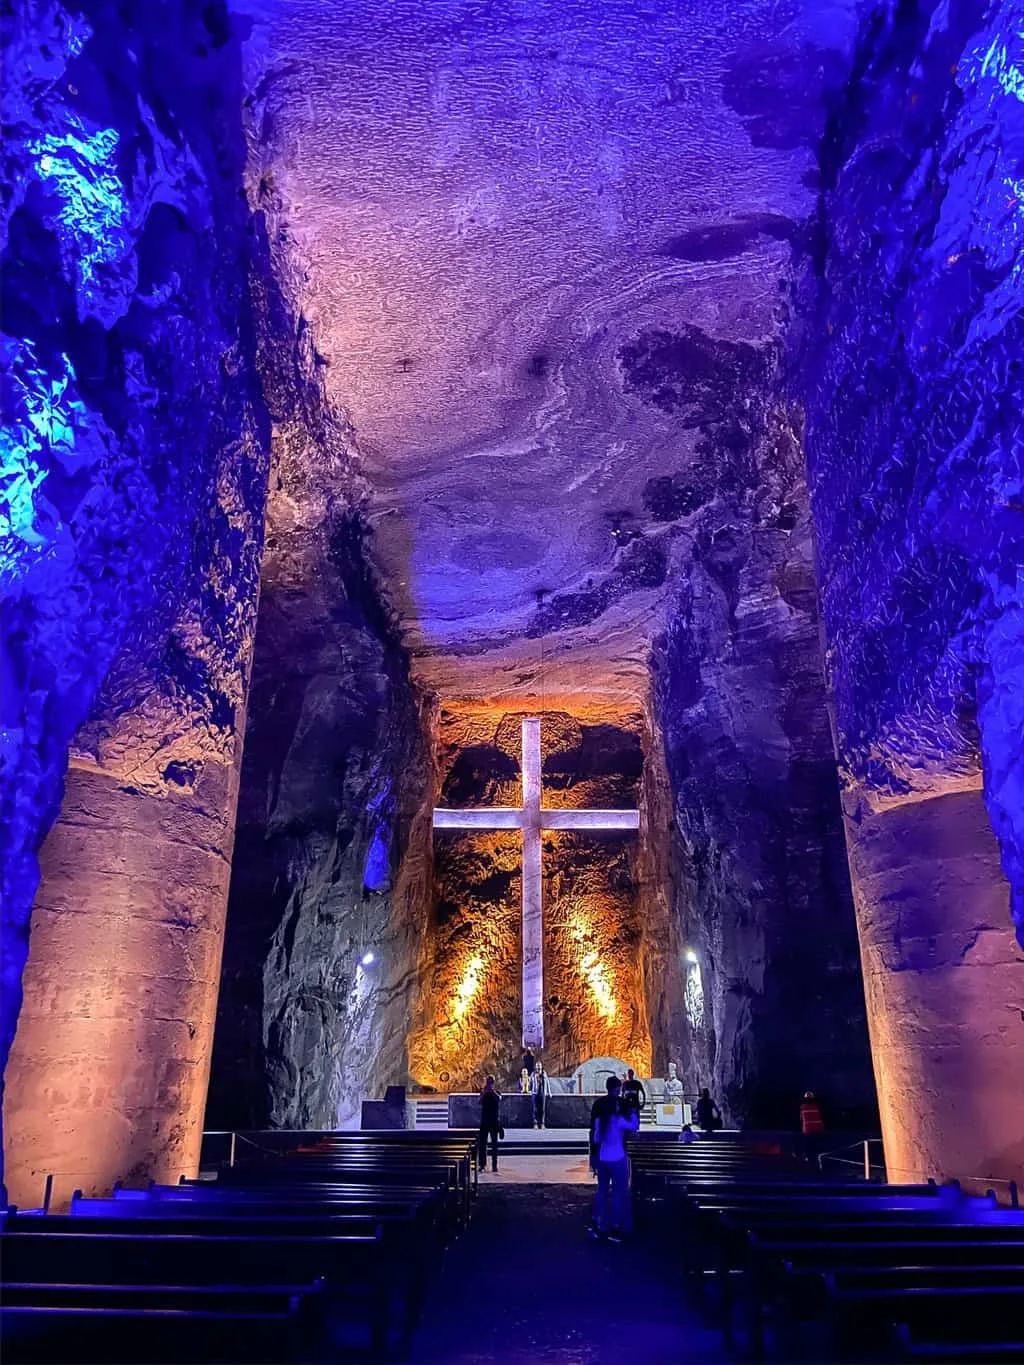 An underground cave church with purple lighting.